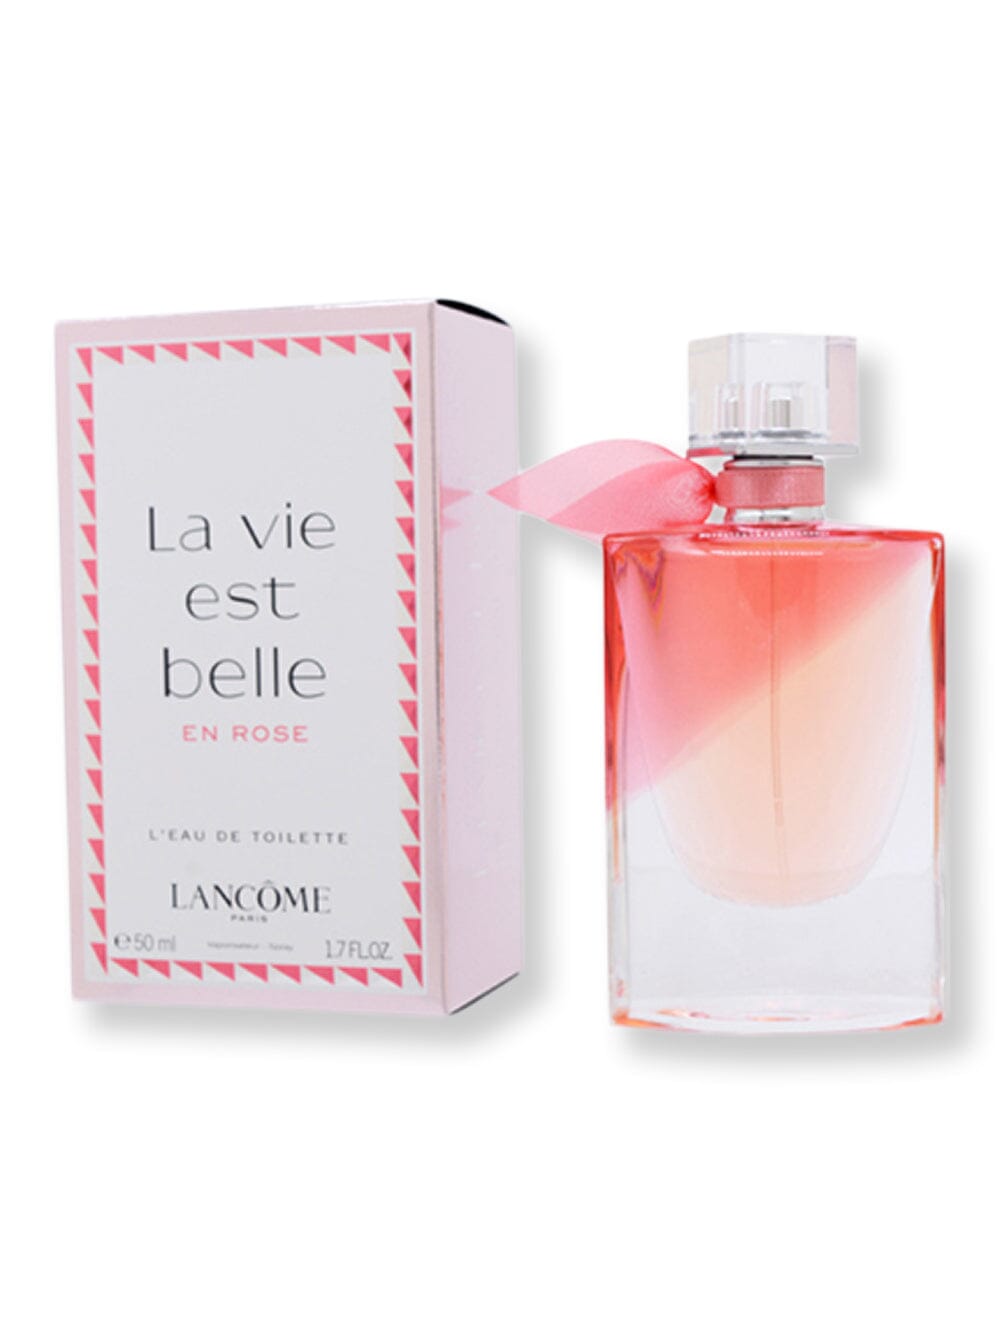 Lancome Lancome La Vie Est Belle En Rose EDT Spray 1.7 oz50 ml Perfume 